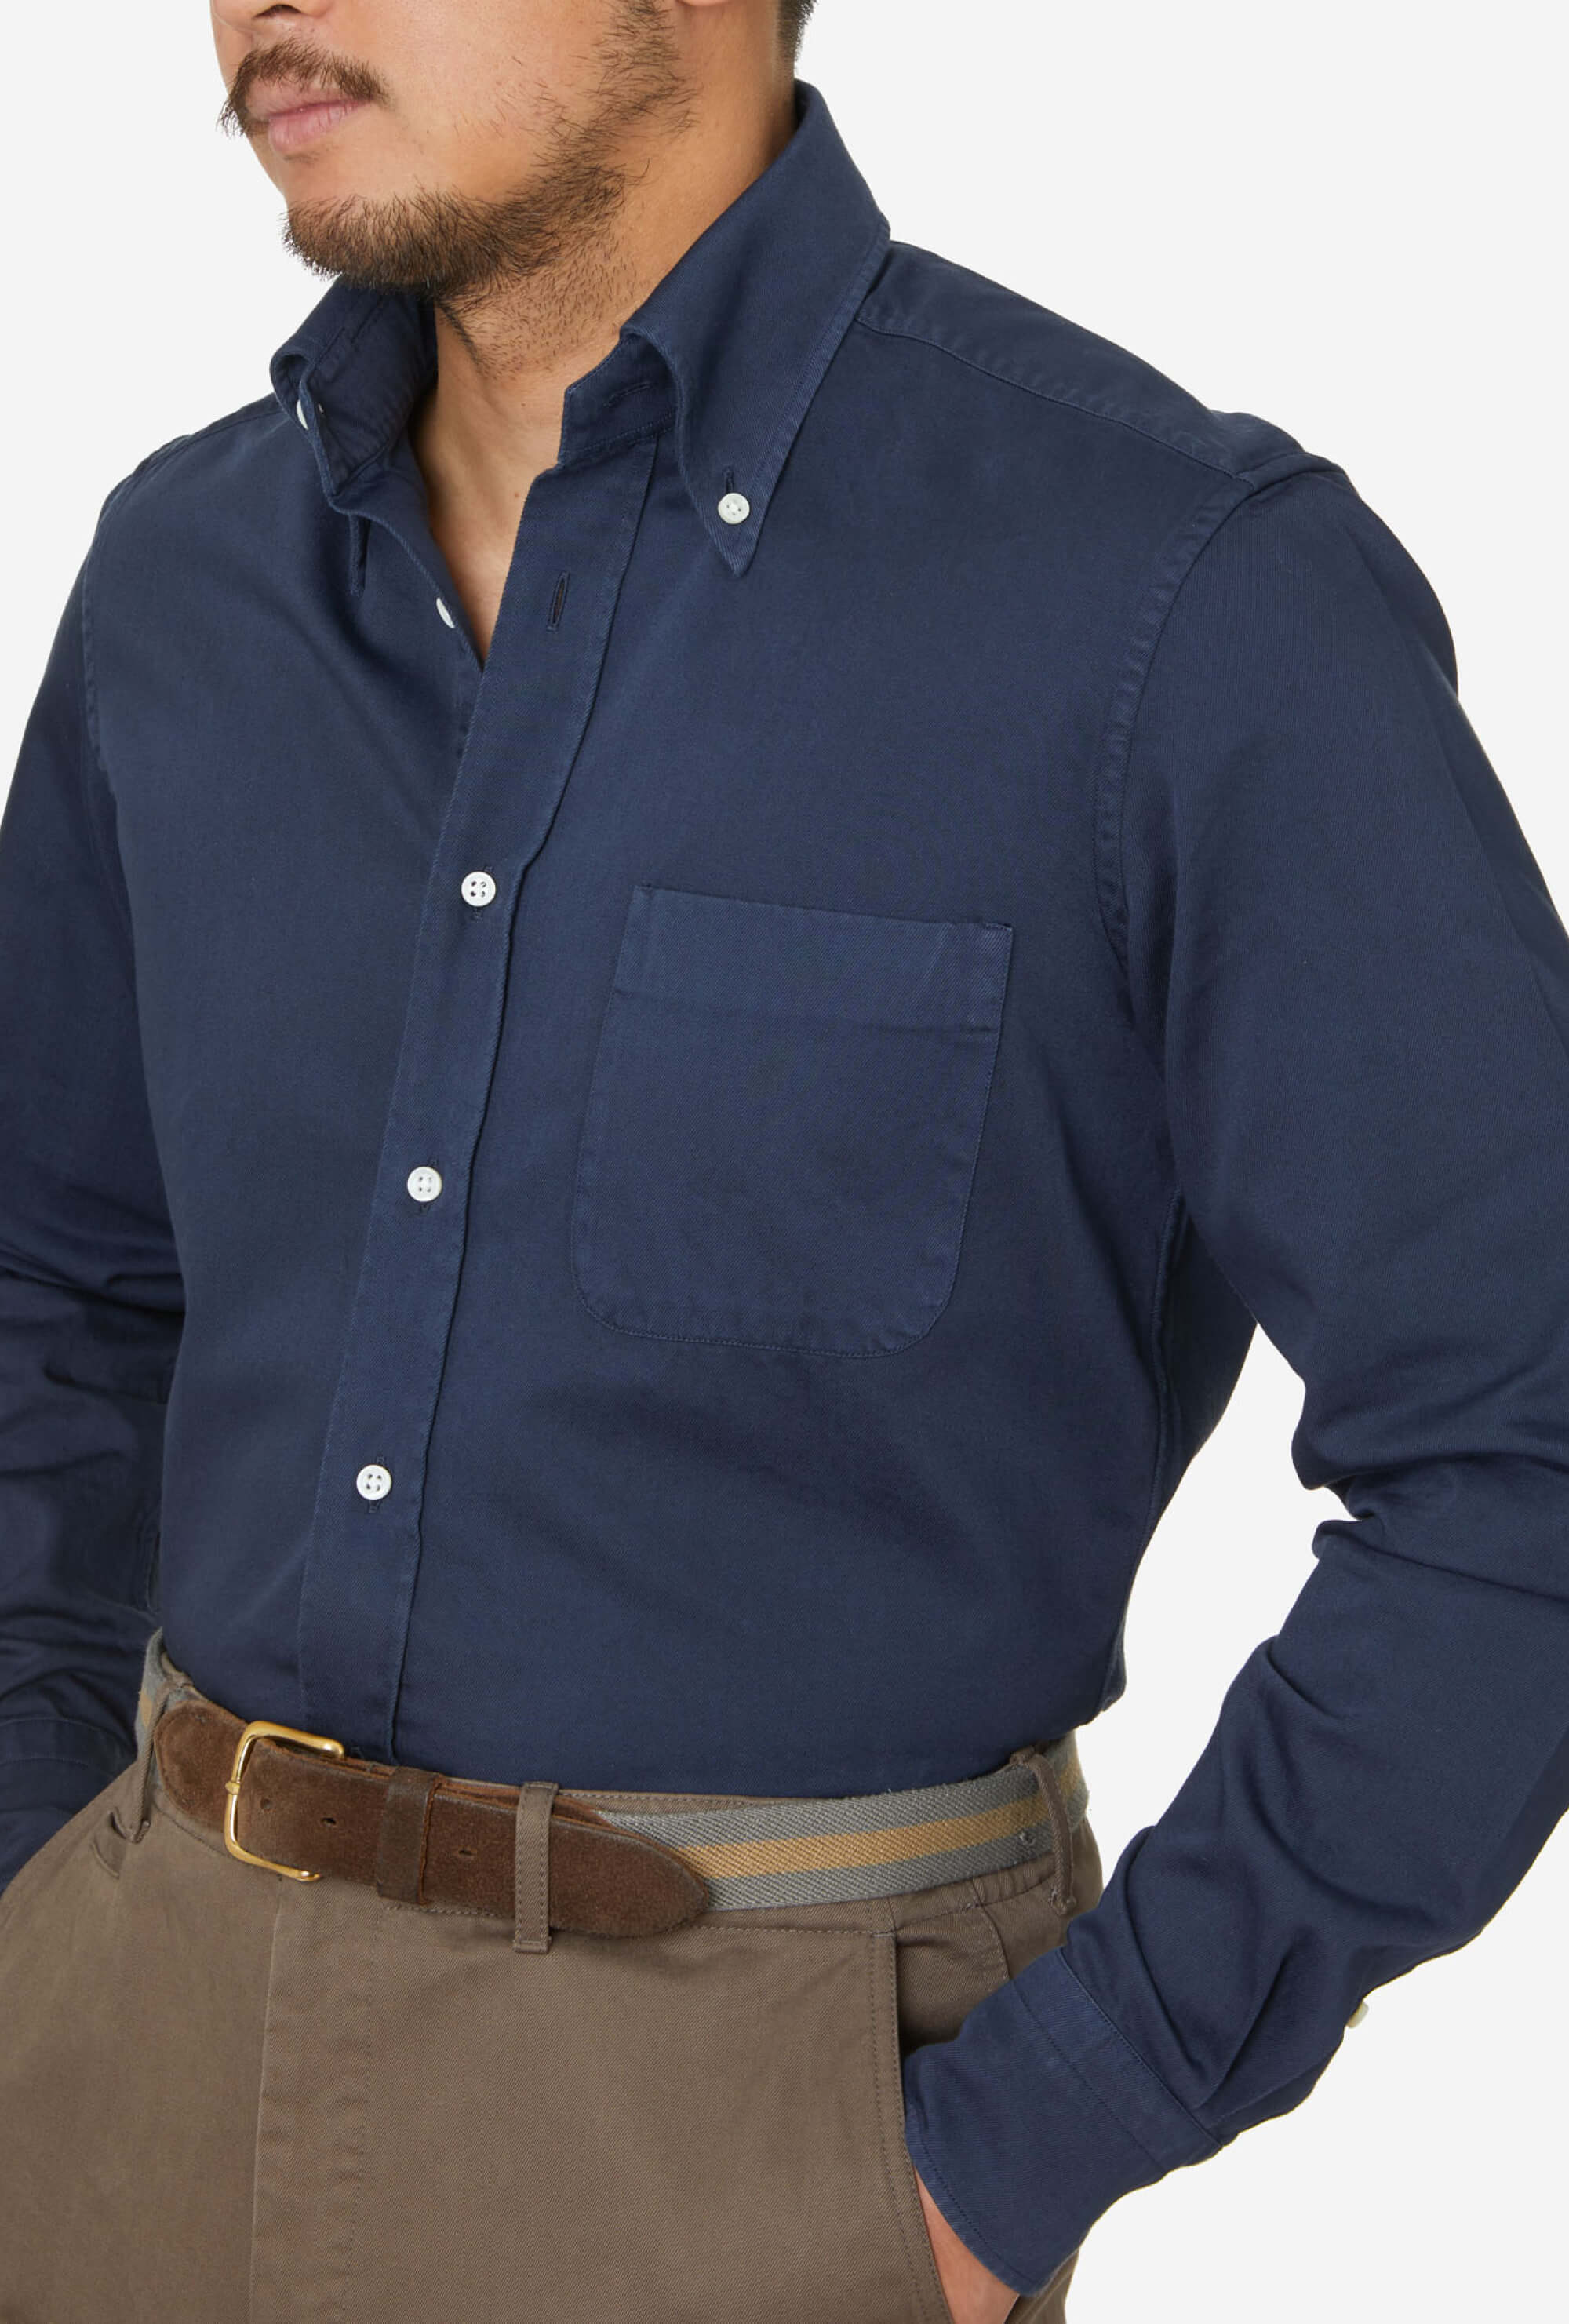 Button Down Sport Shirt Garment Dye Navy